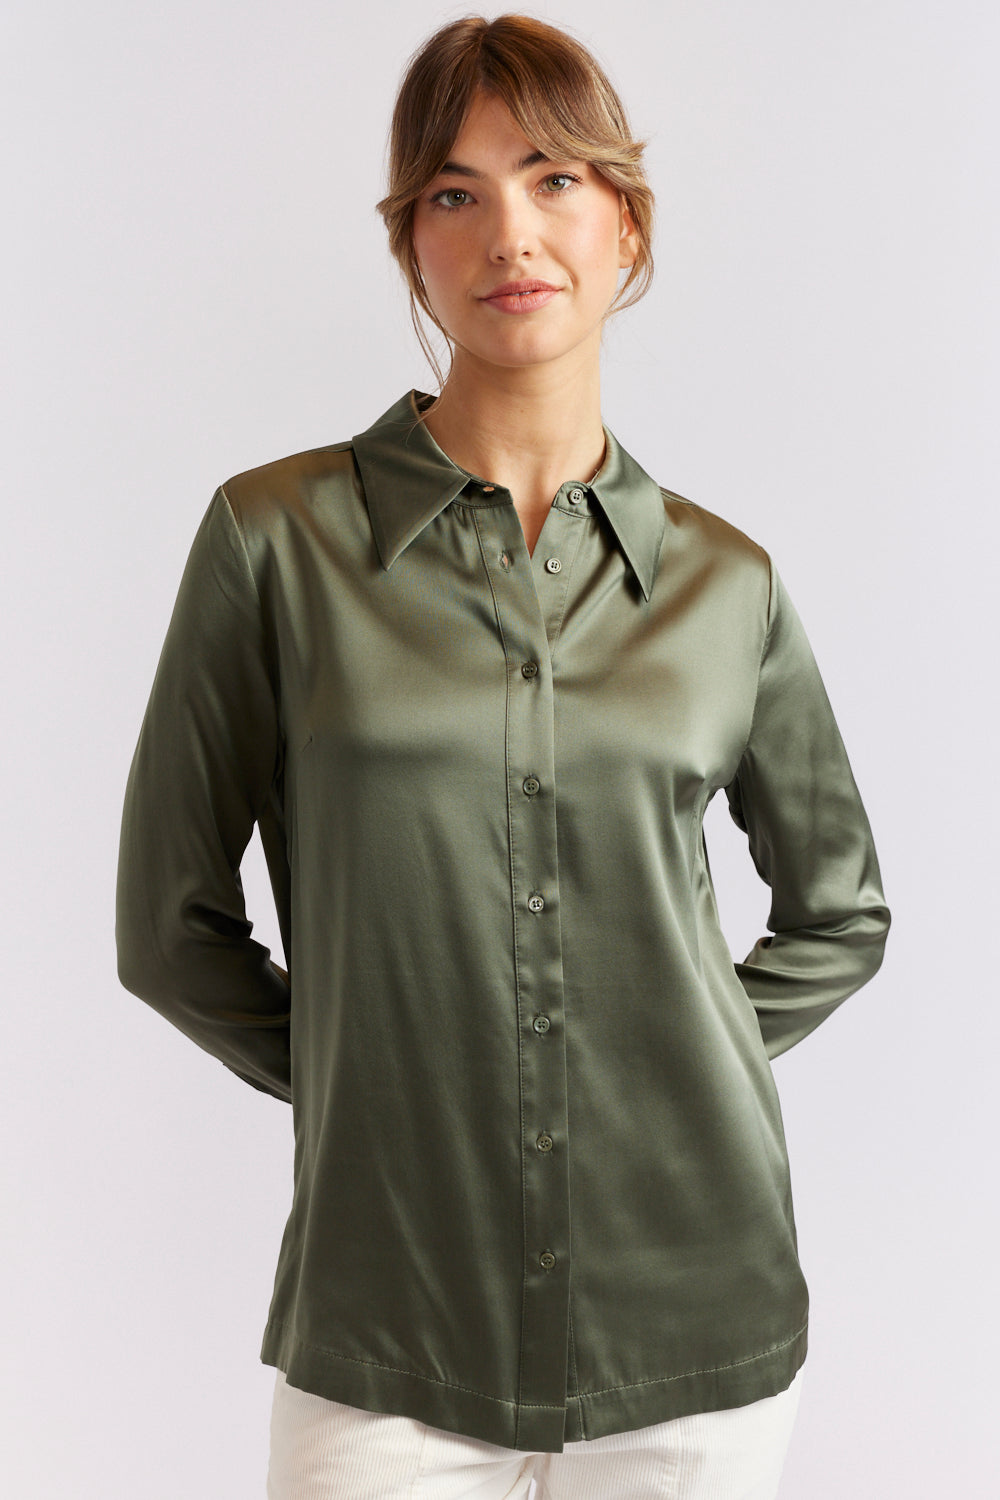 Alessandra | Primrose Silk Shirt in Fern